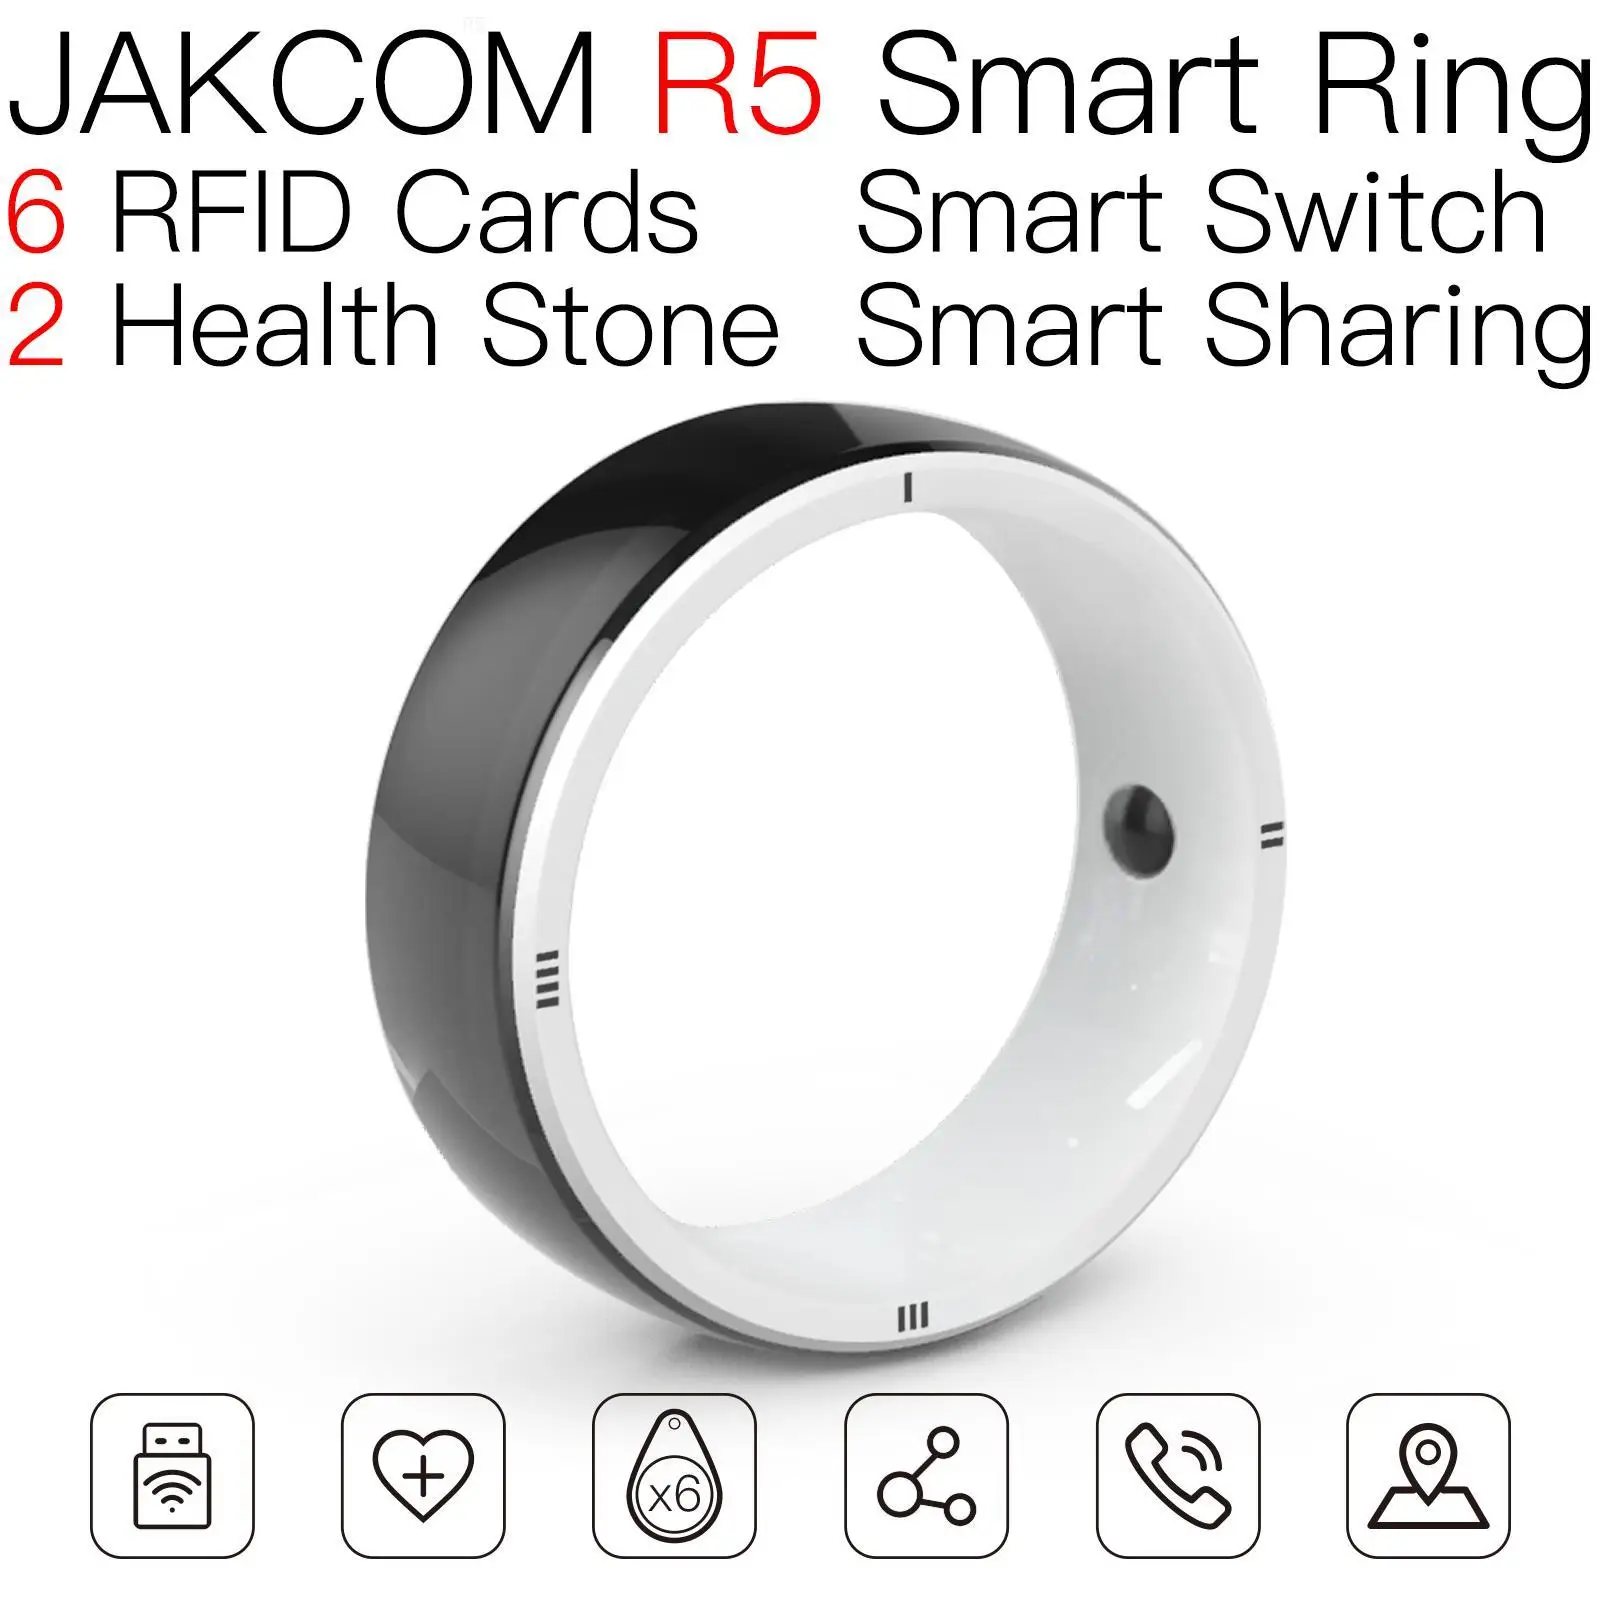 

JAKCOM R5 Smart Ring For men women p11 plus official store s3 b57 watch lite smart life products home kits desk